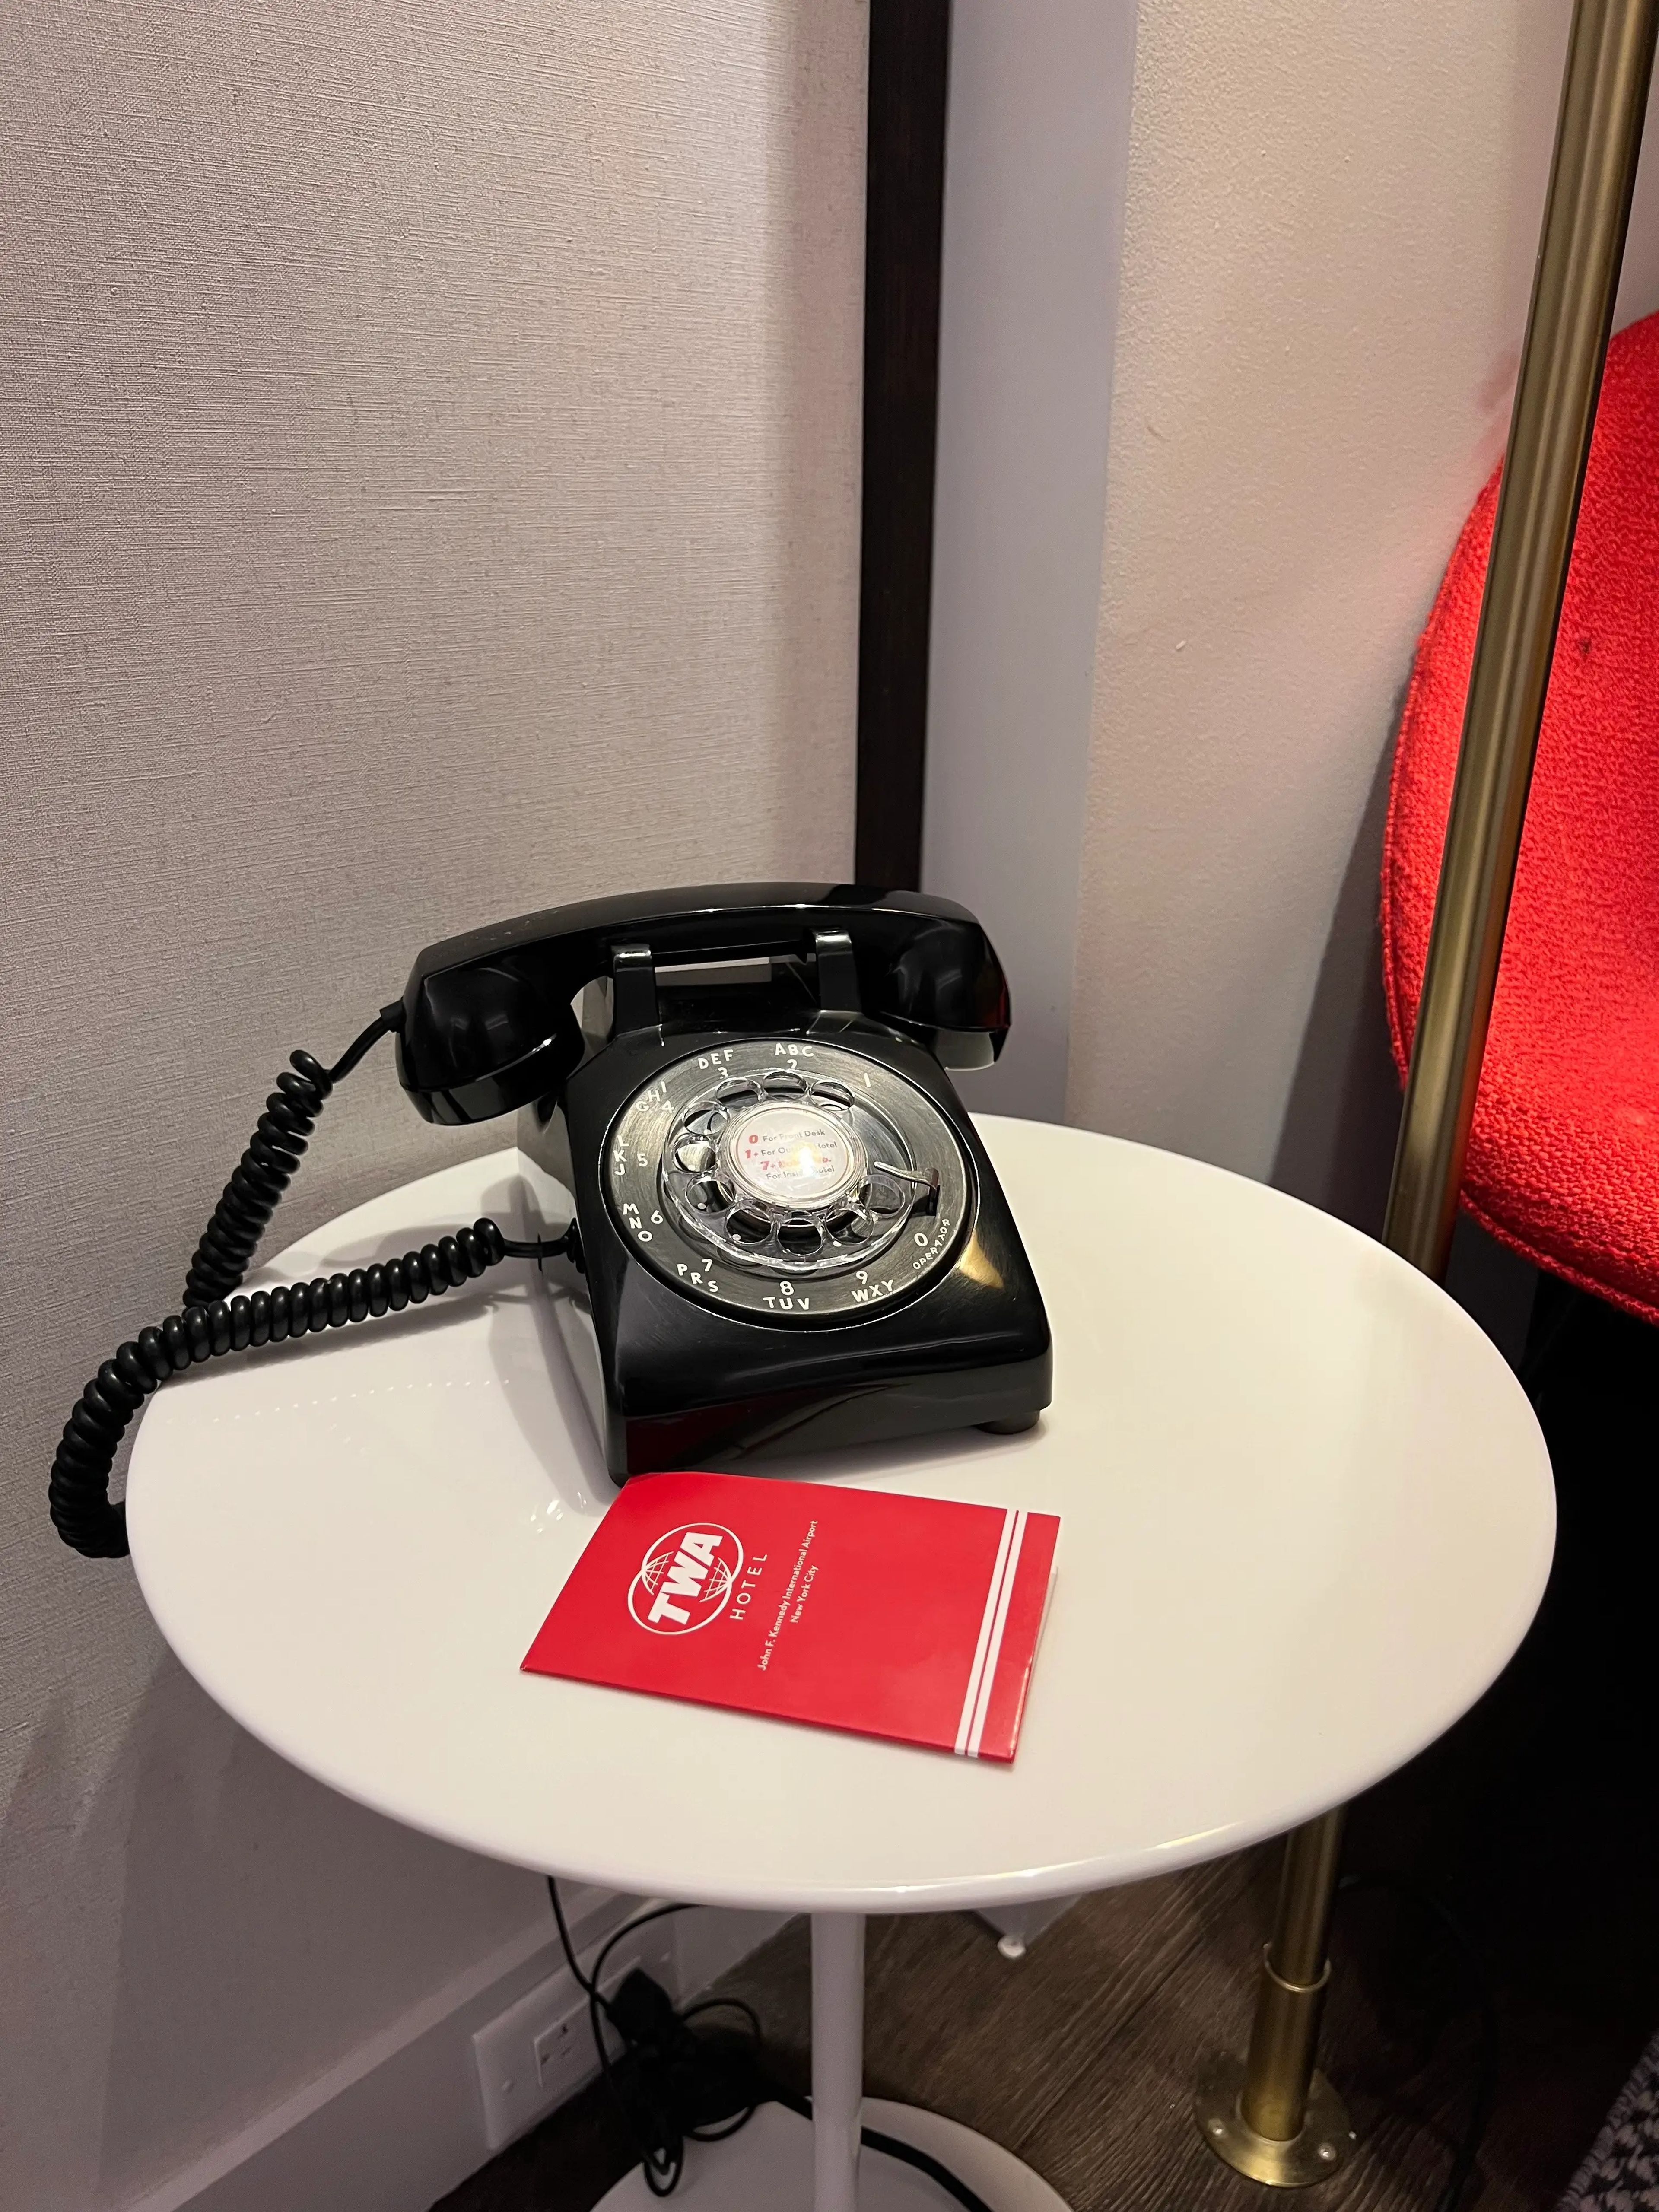 TWA HOTEL rotary phone